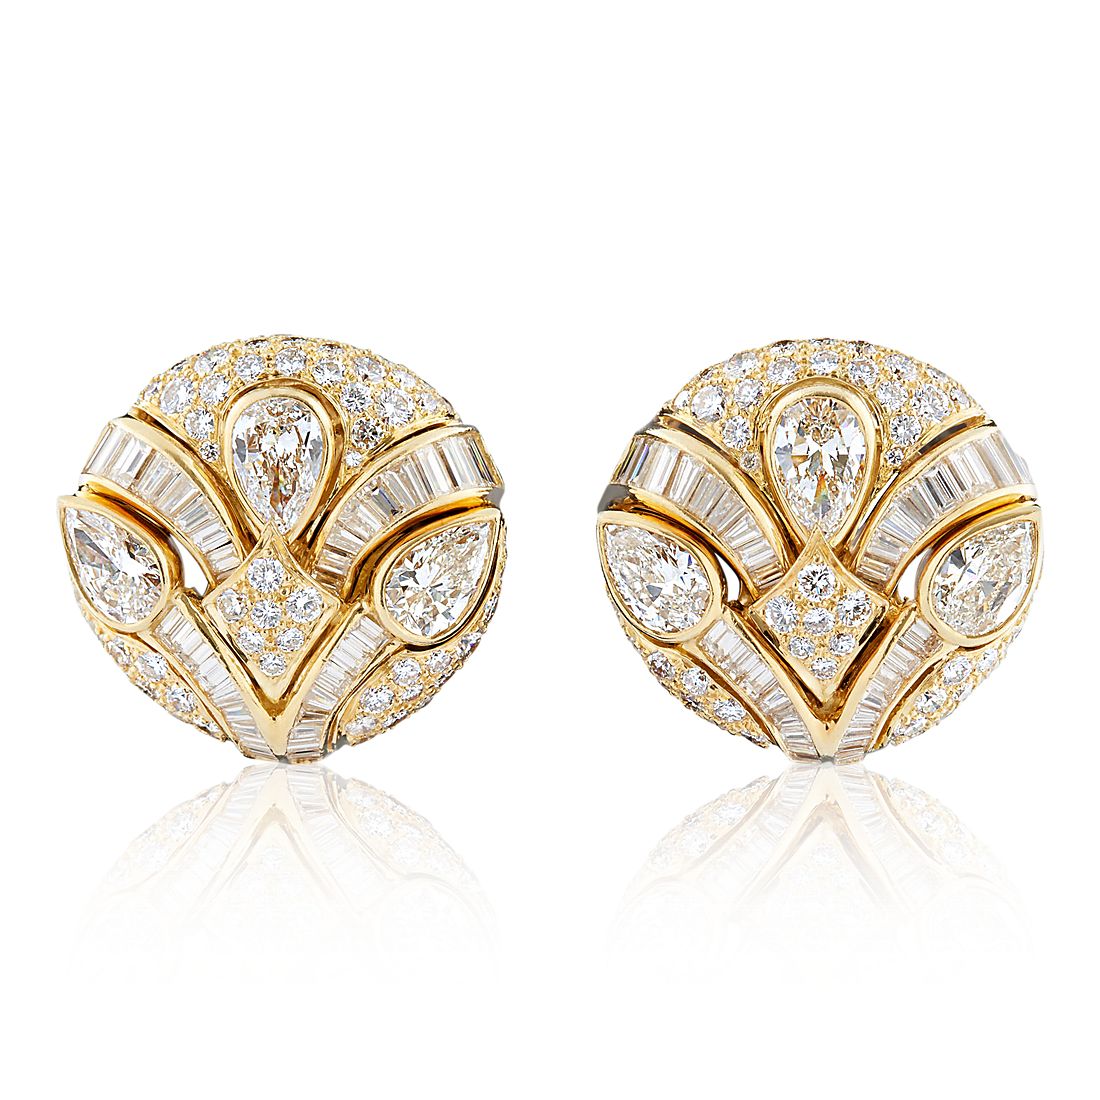 Estate Diamond Button Earrings in 18k Yellow Gold (11.83 ct. tw.)